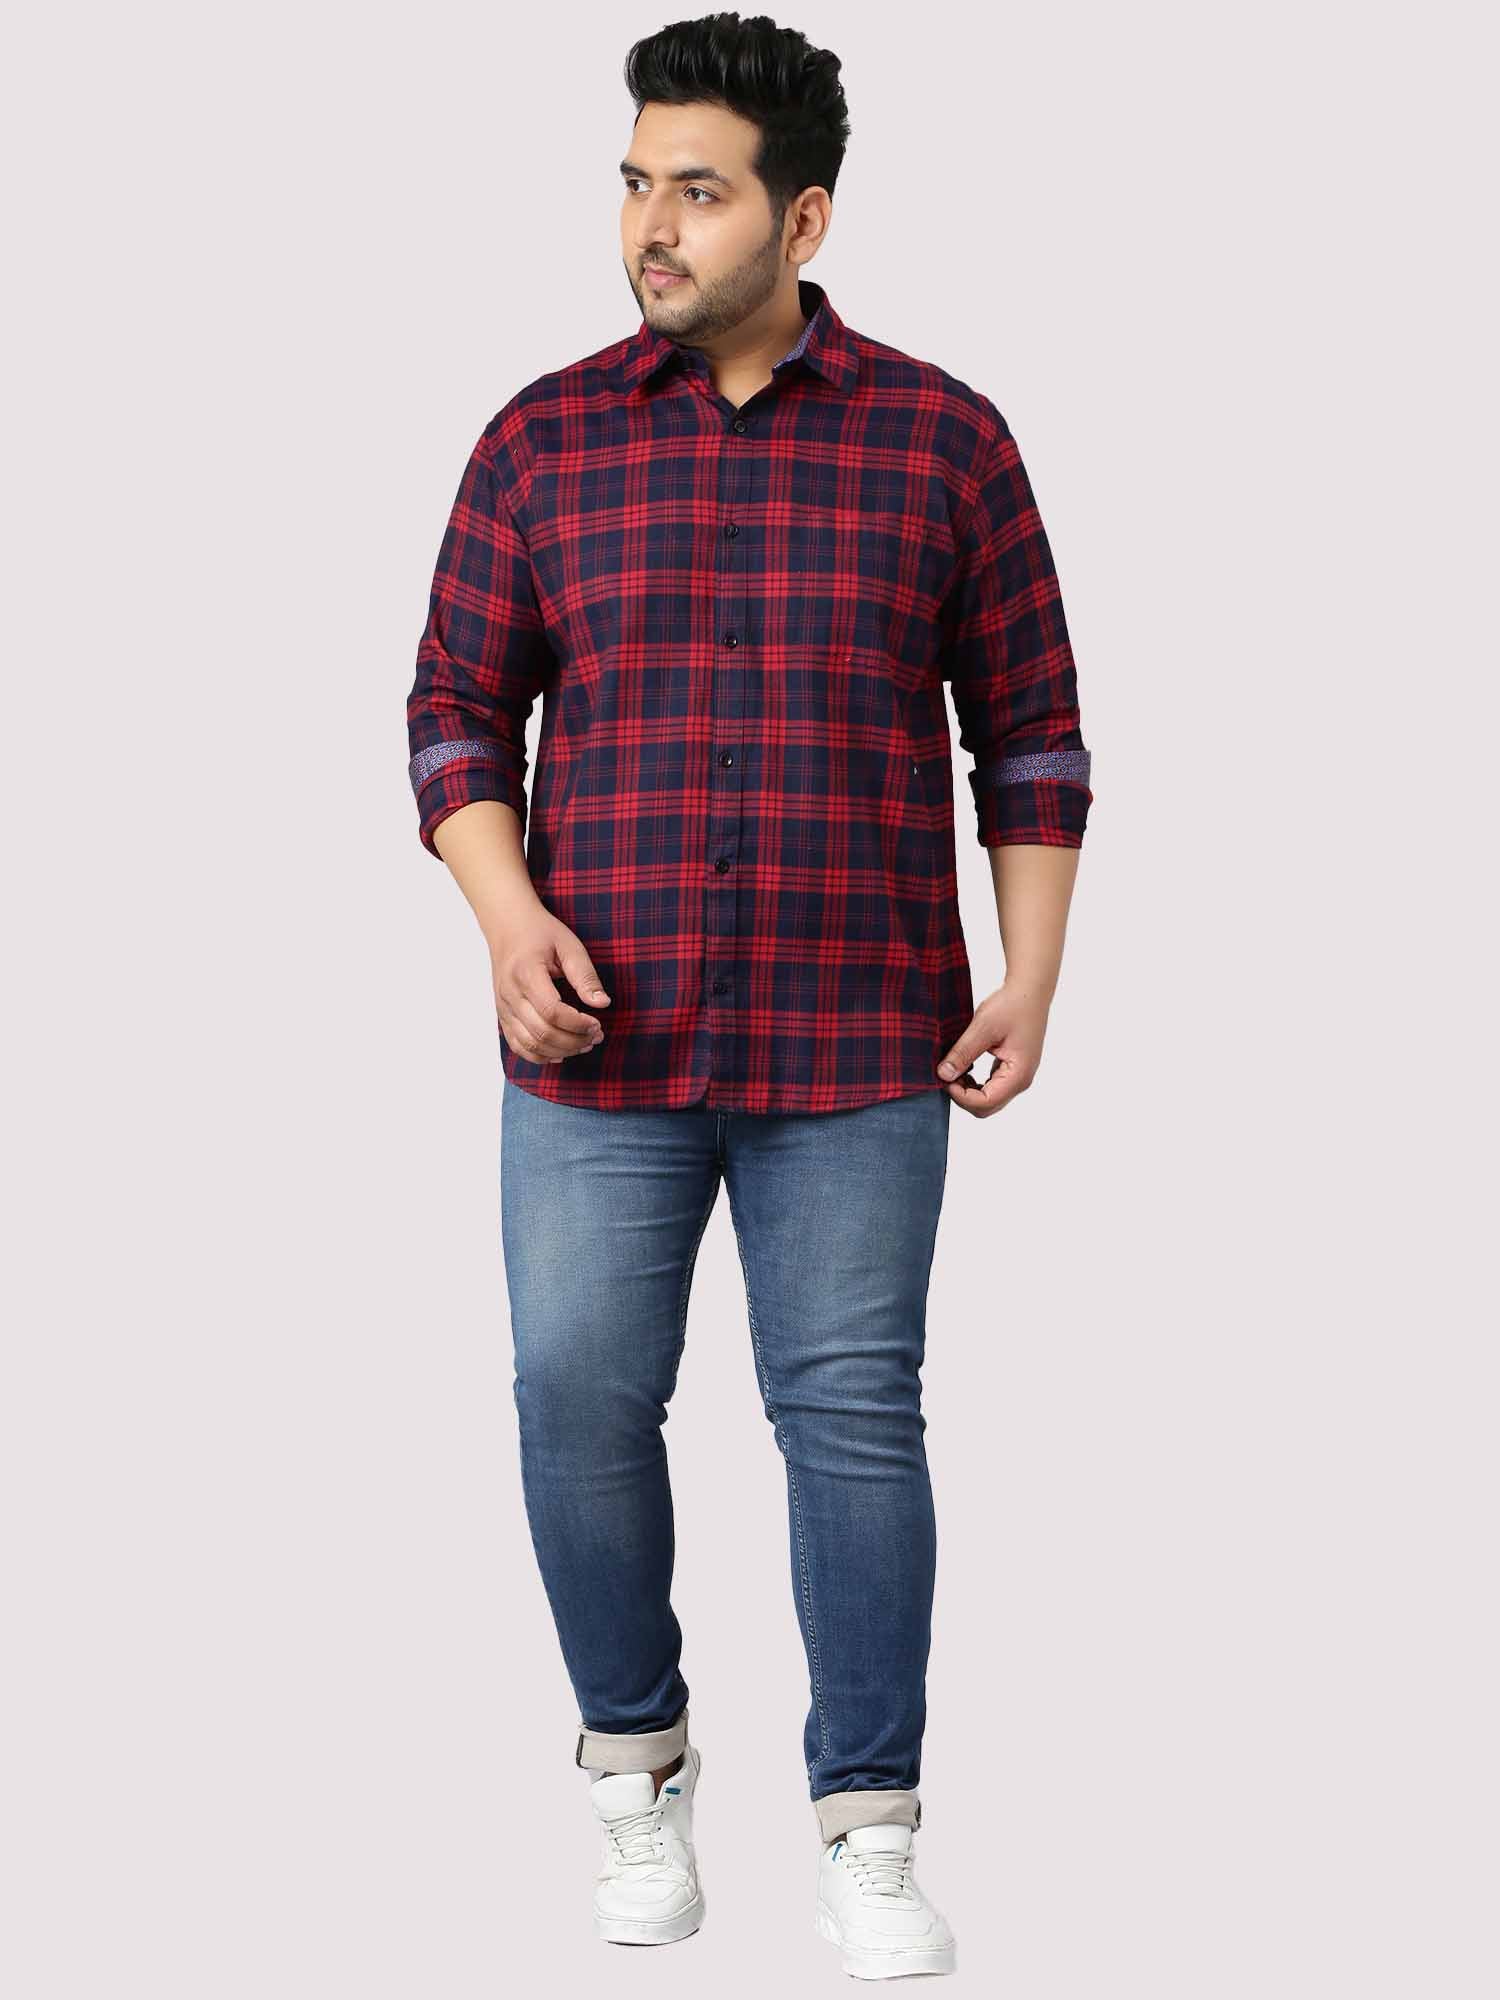 Red and Blue Indigo Cotton Check Shirt Men's Plus Size